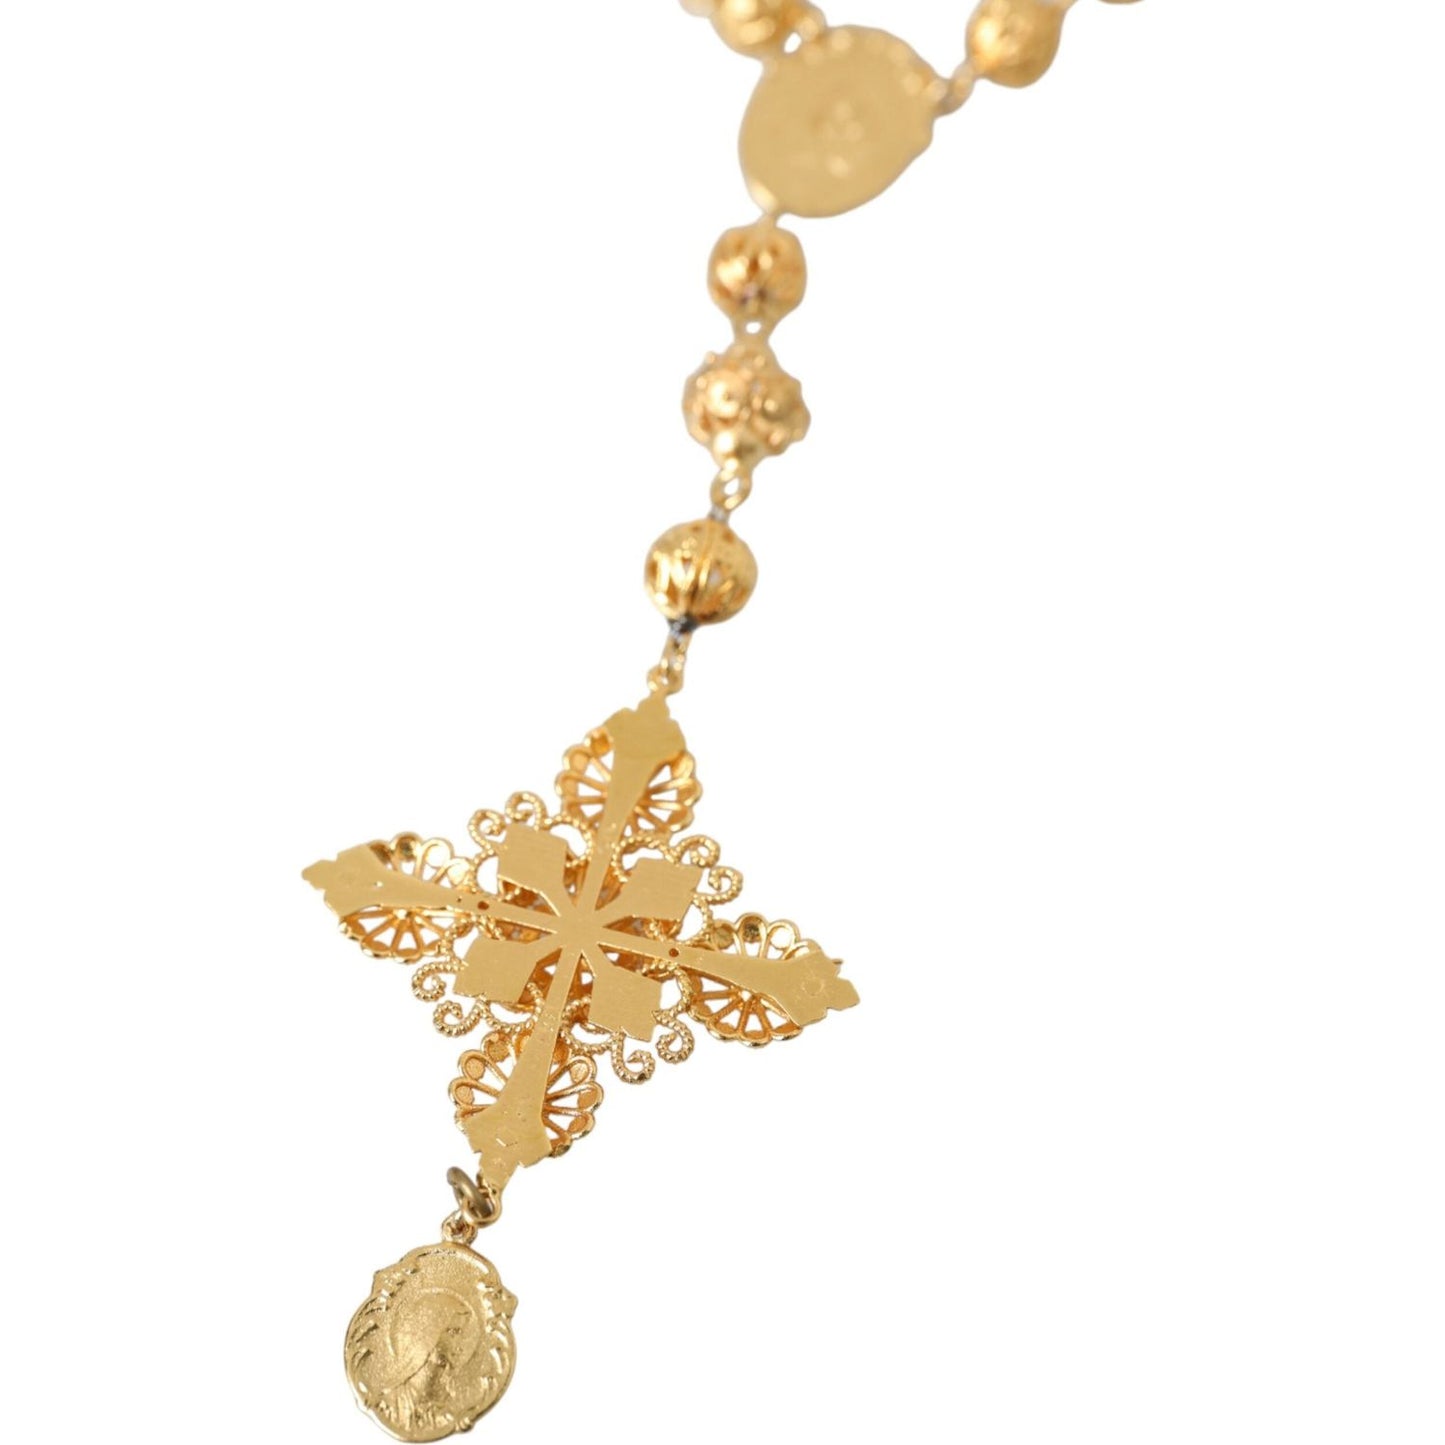 Gold Tone Chain Brass Beaded Statement Sicily Necklace Dolce & Gabbana